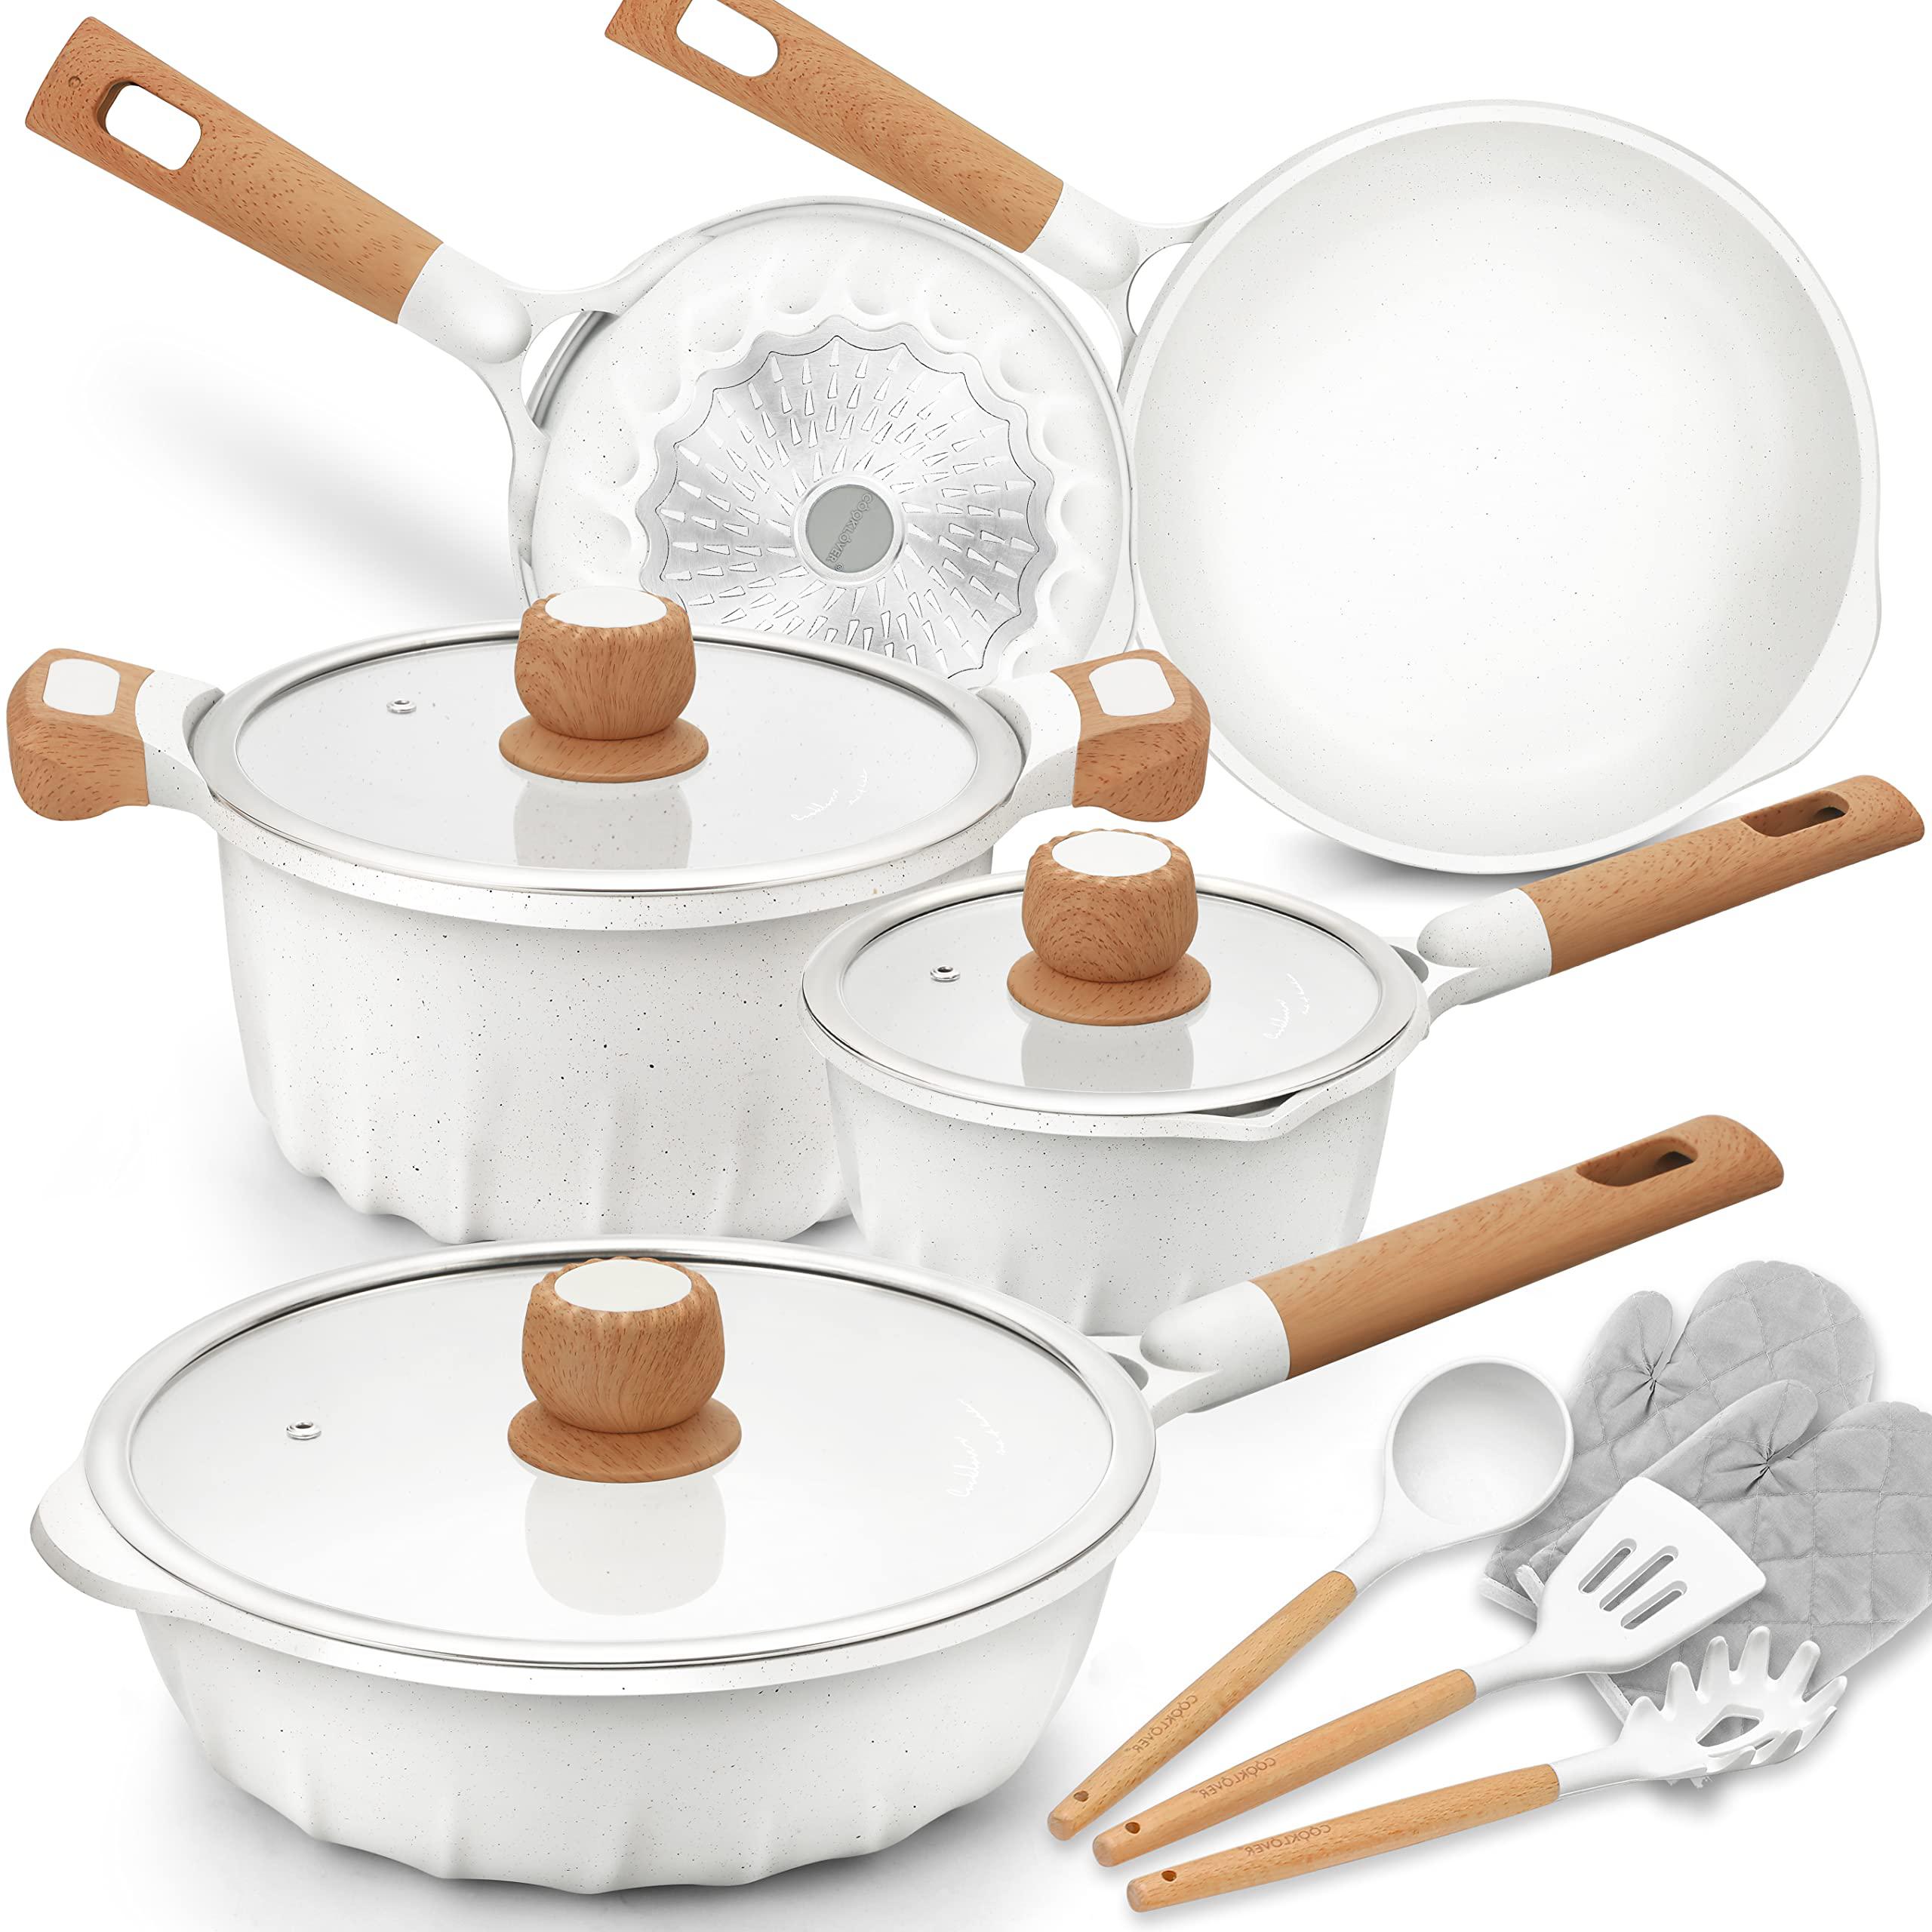 COOKLOVER cookware set nonstick 100% pfoa free induction pots